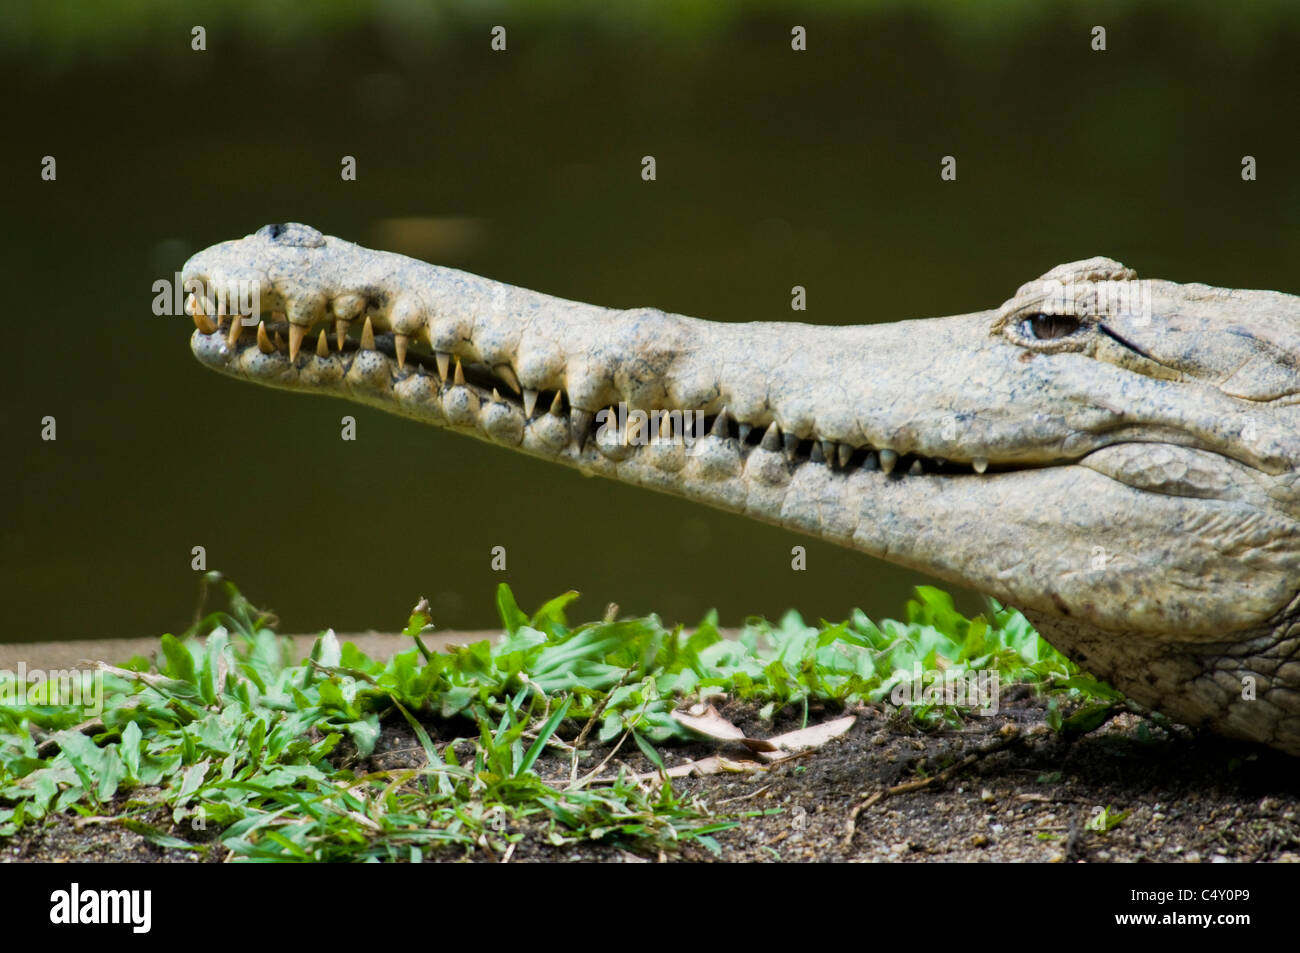 Freshwater crocodile (Crocodylus johnsoni) at the Cairns Tropical Zoo in Queensland Australia Stock Photo